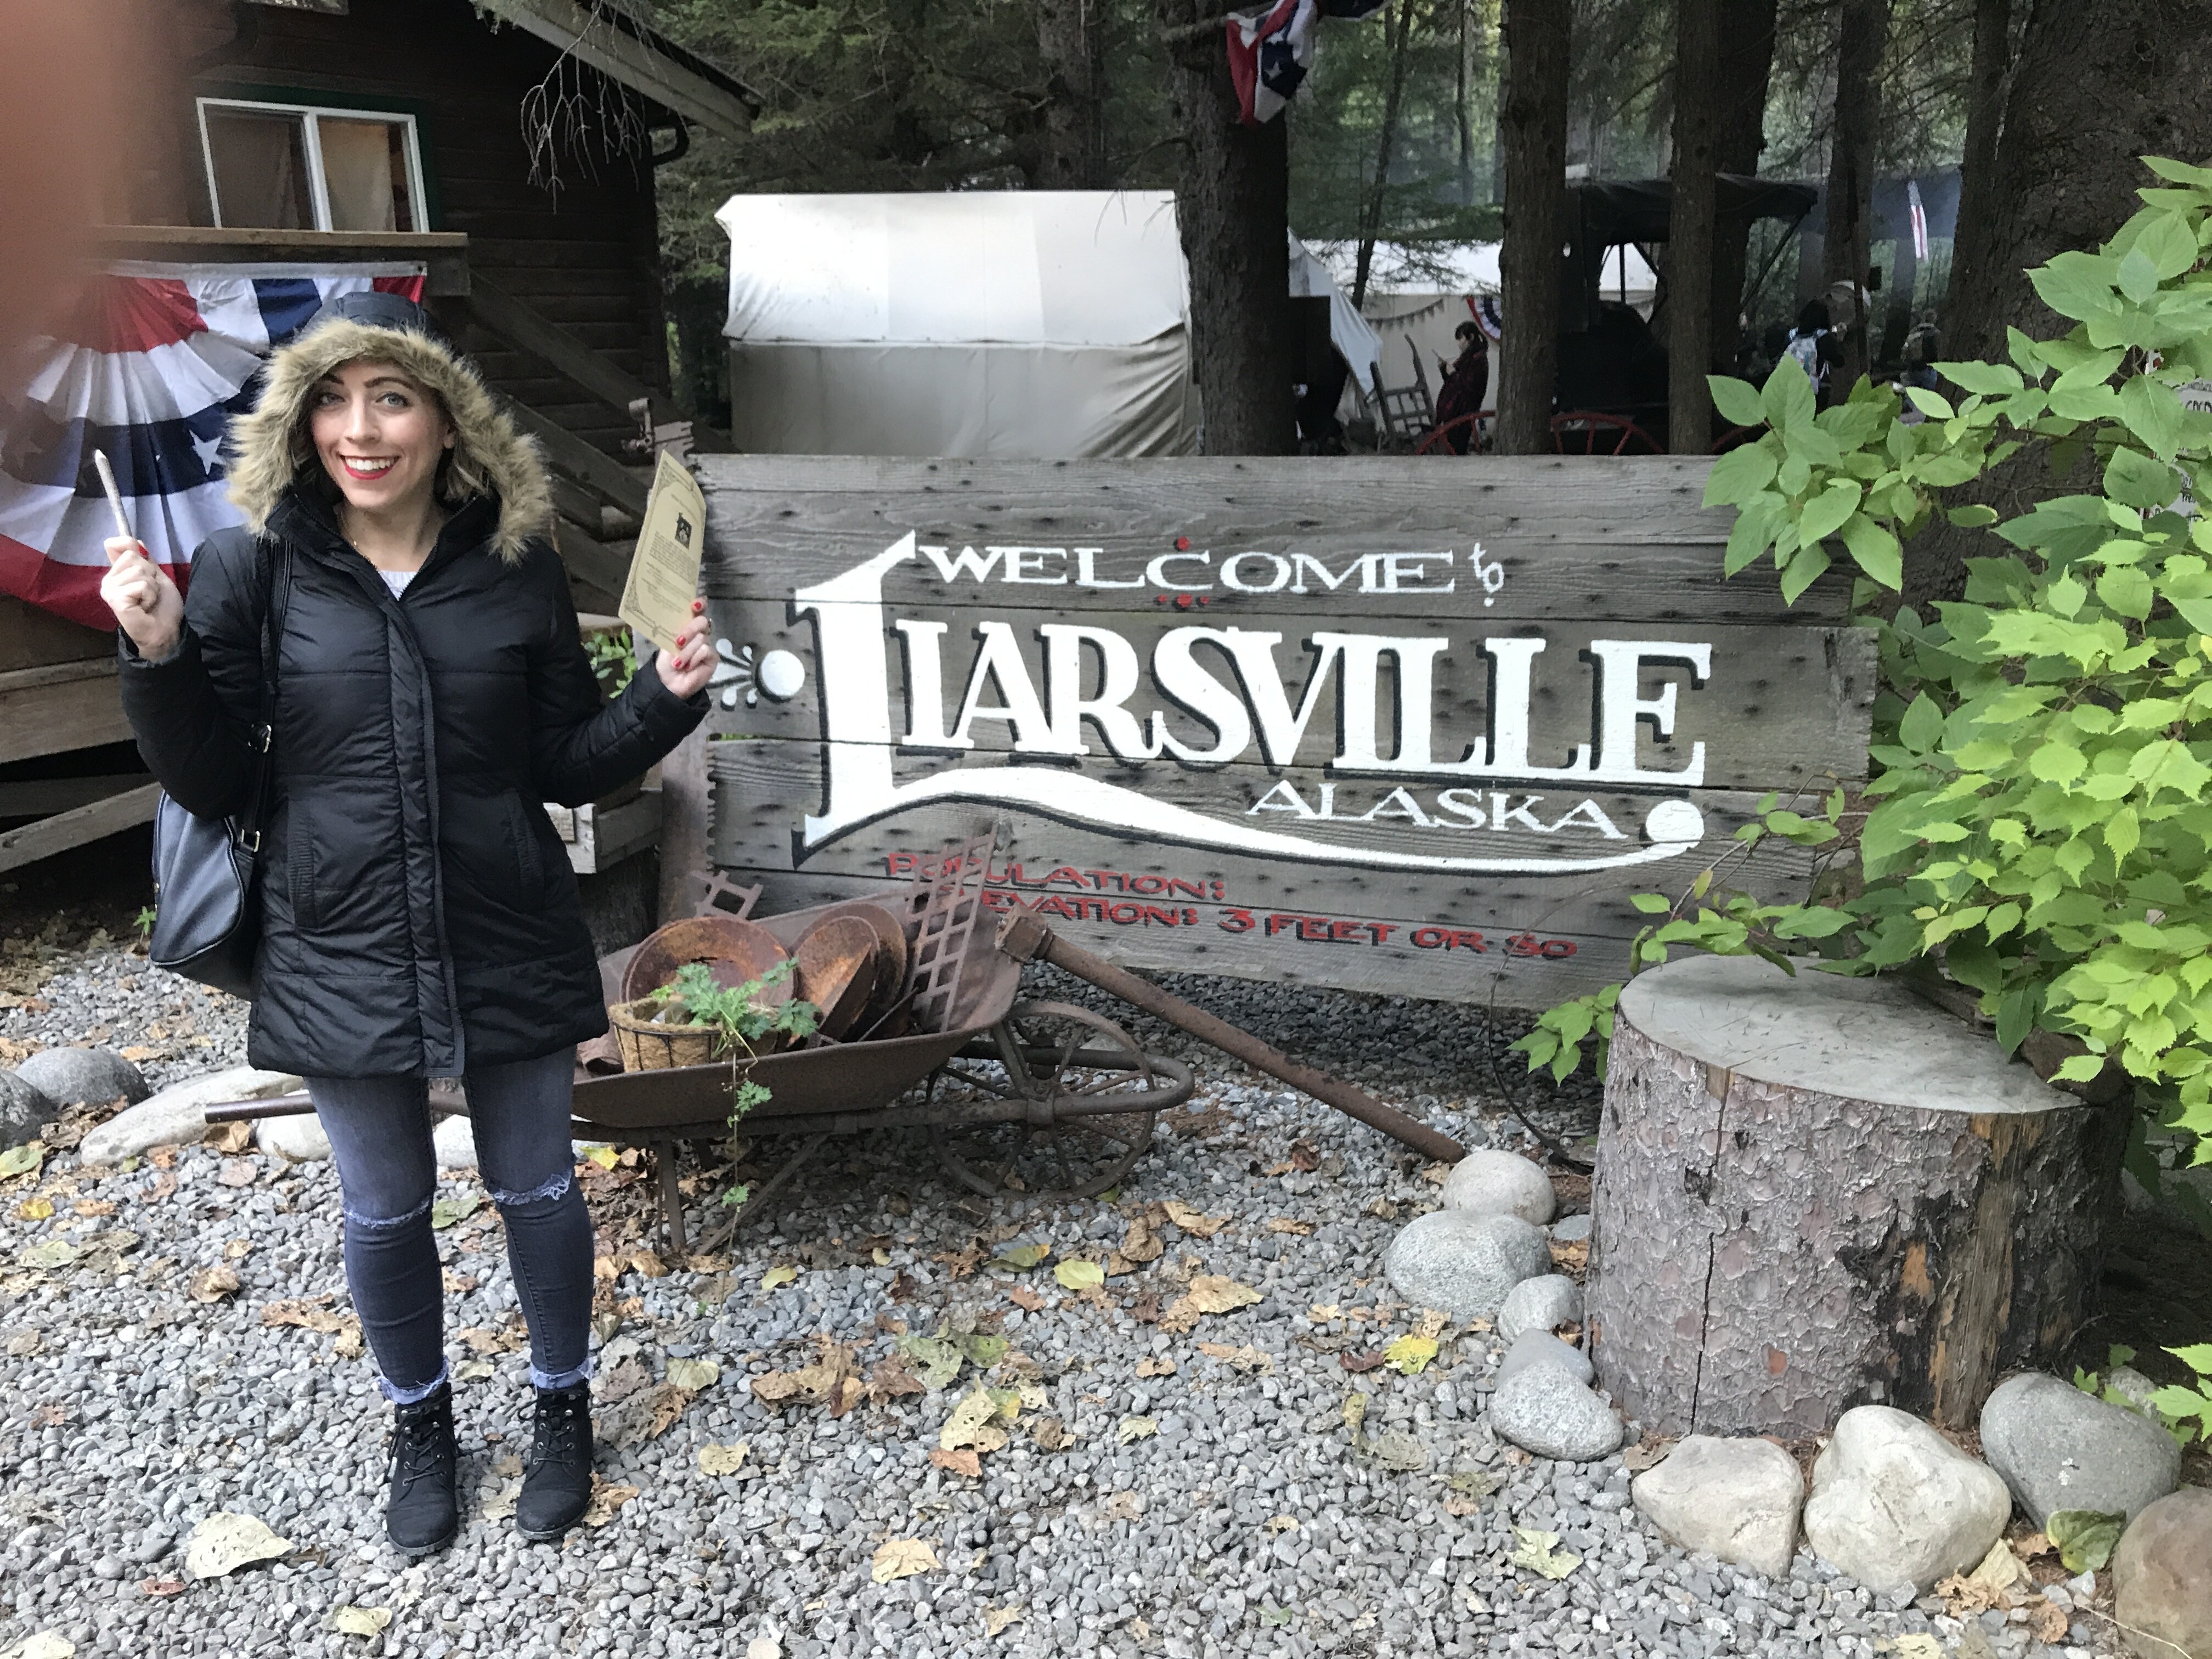 Skagway Liarsville Excursion on Disney Wonder in Alaska with Oh My Disney host Michelle Lema